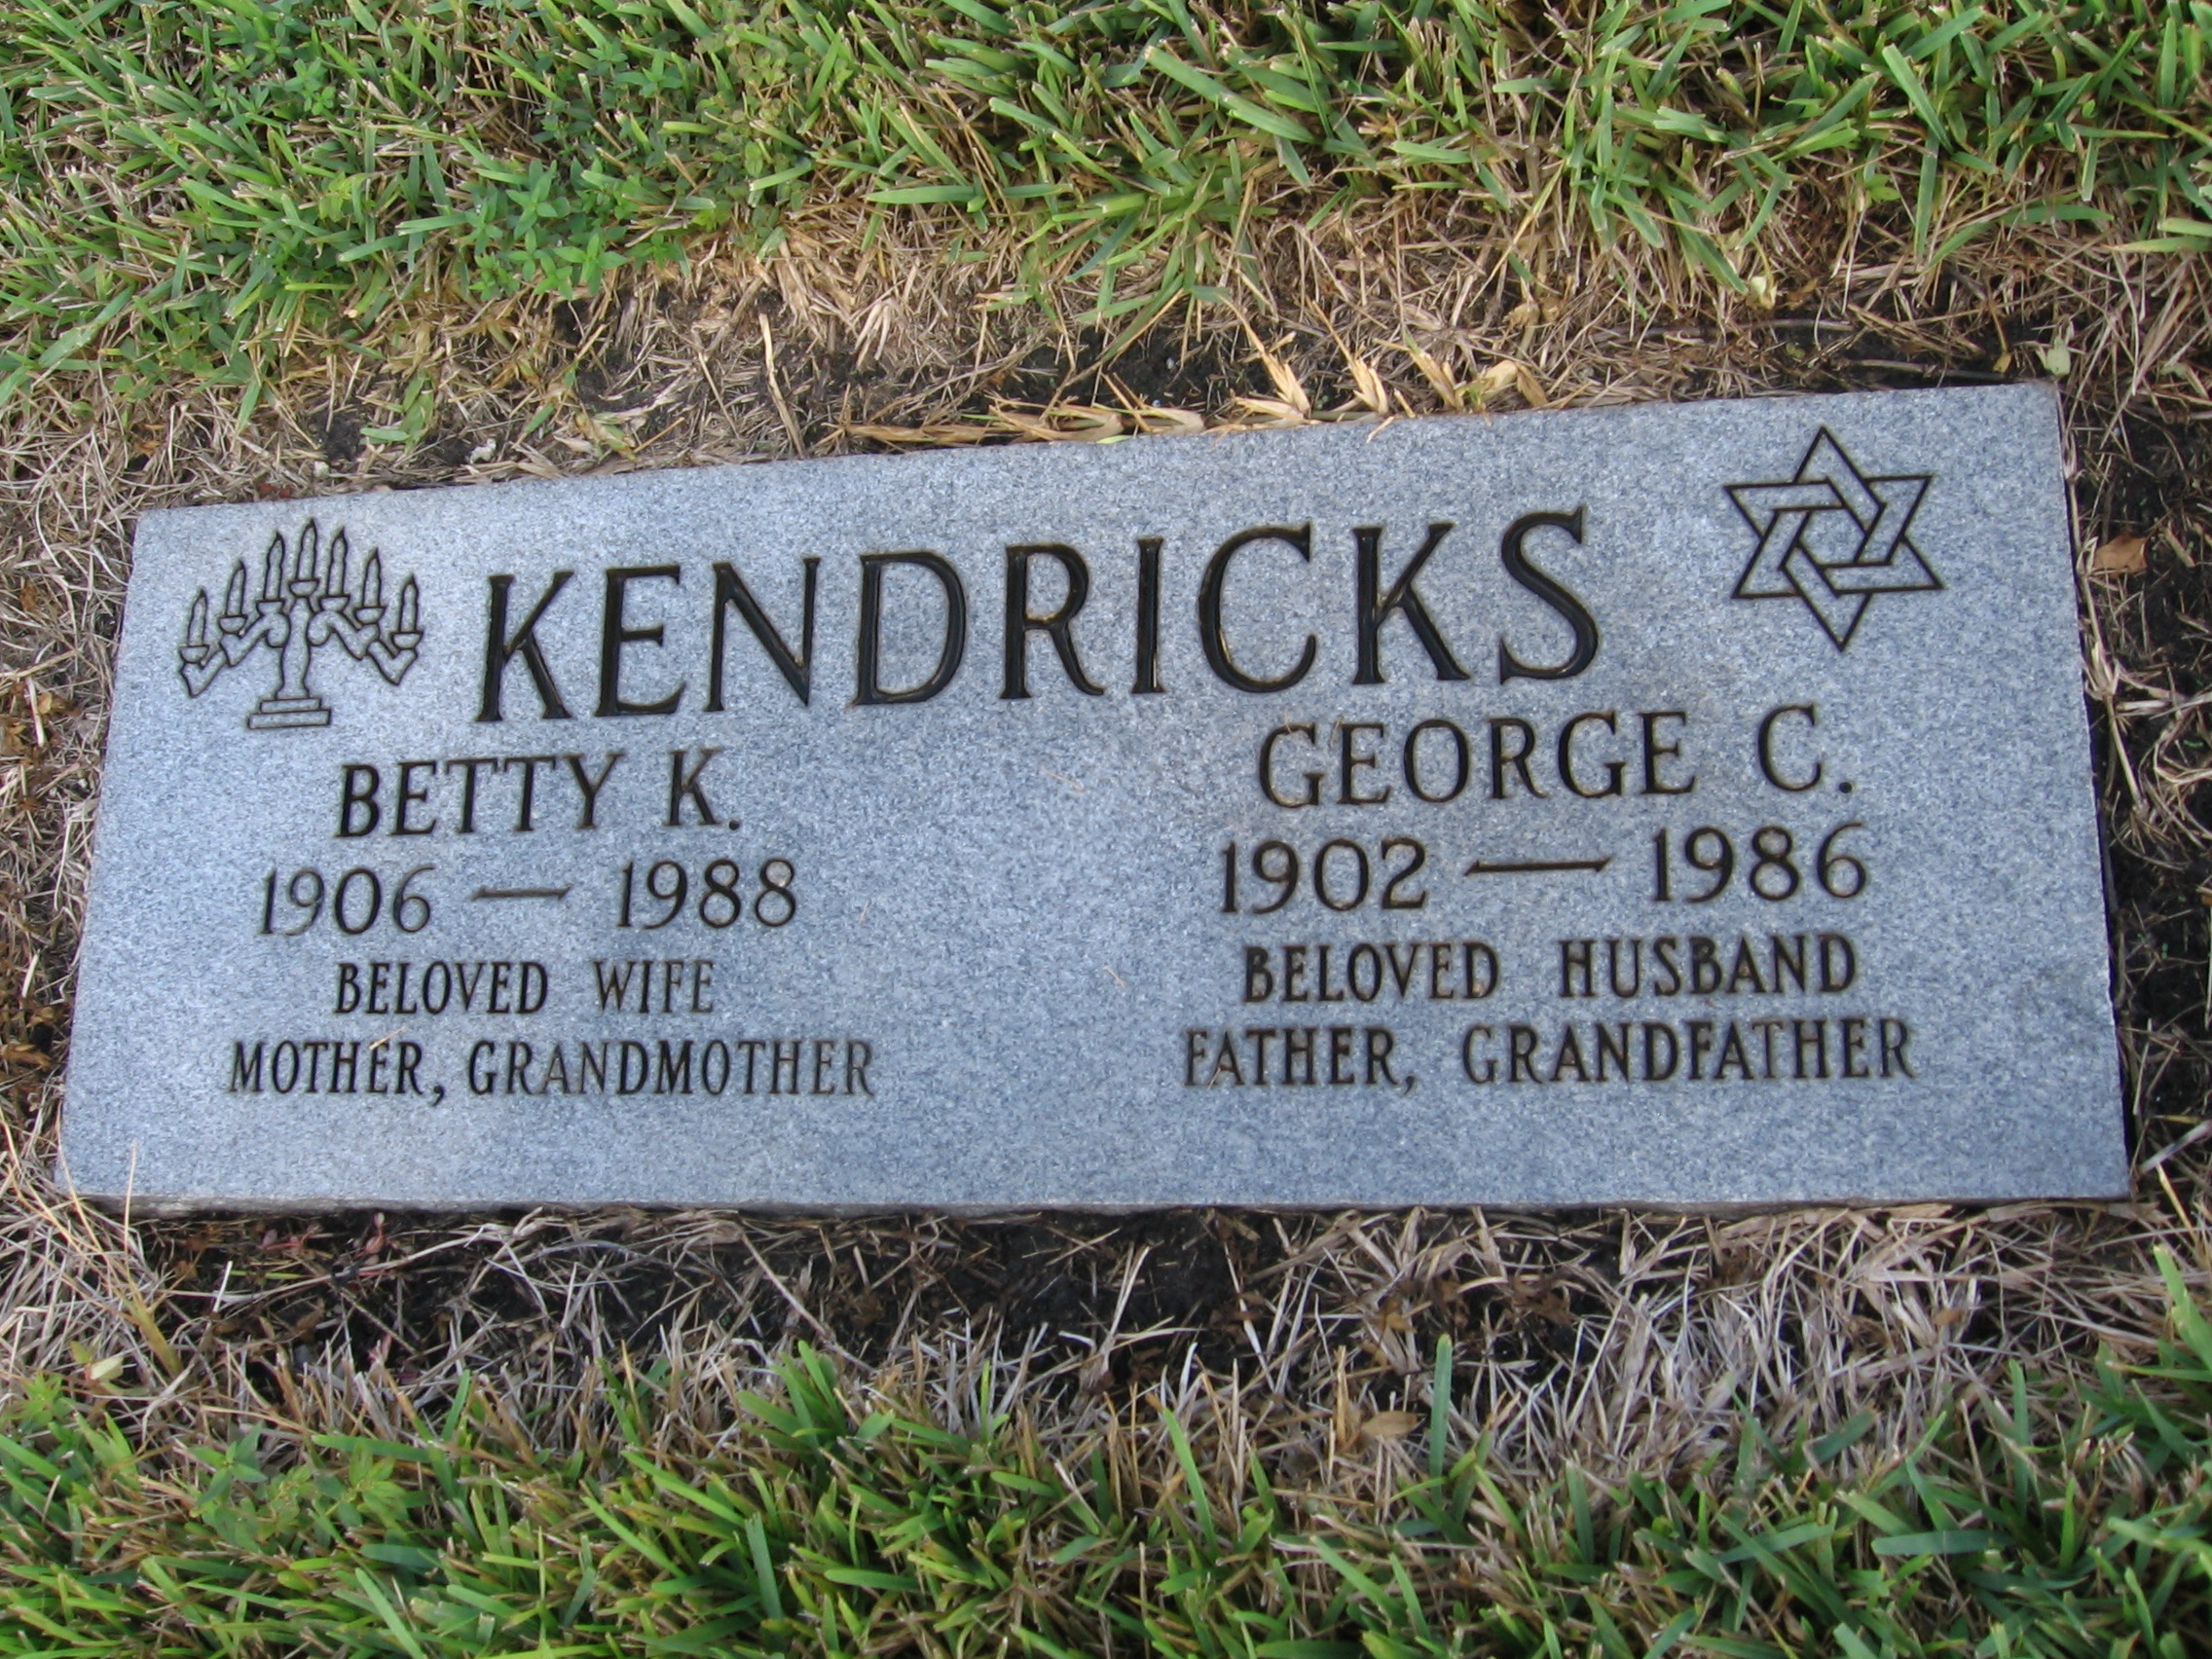 Betty K Kendricks